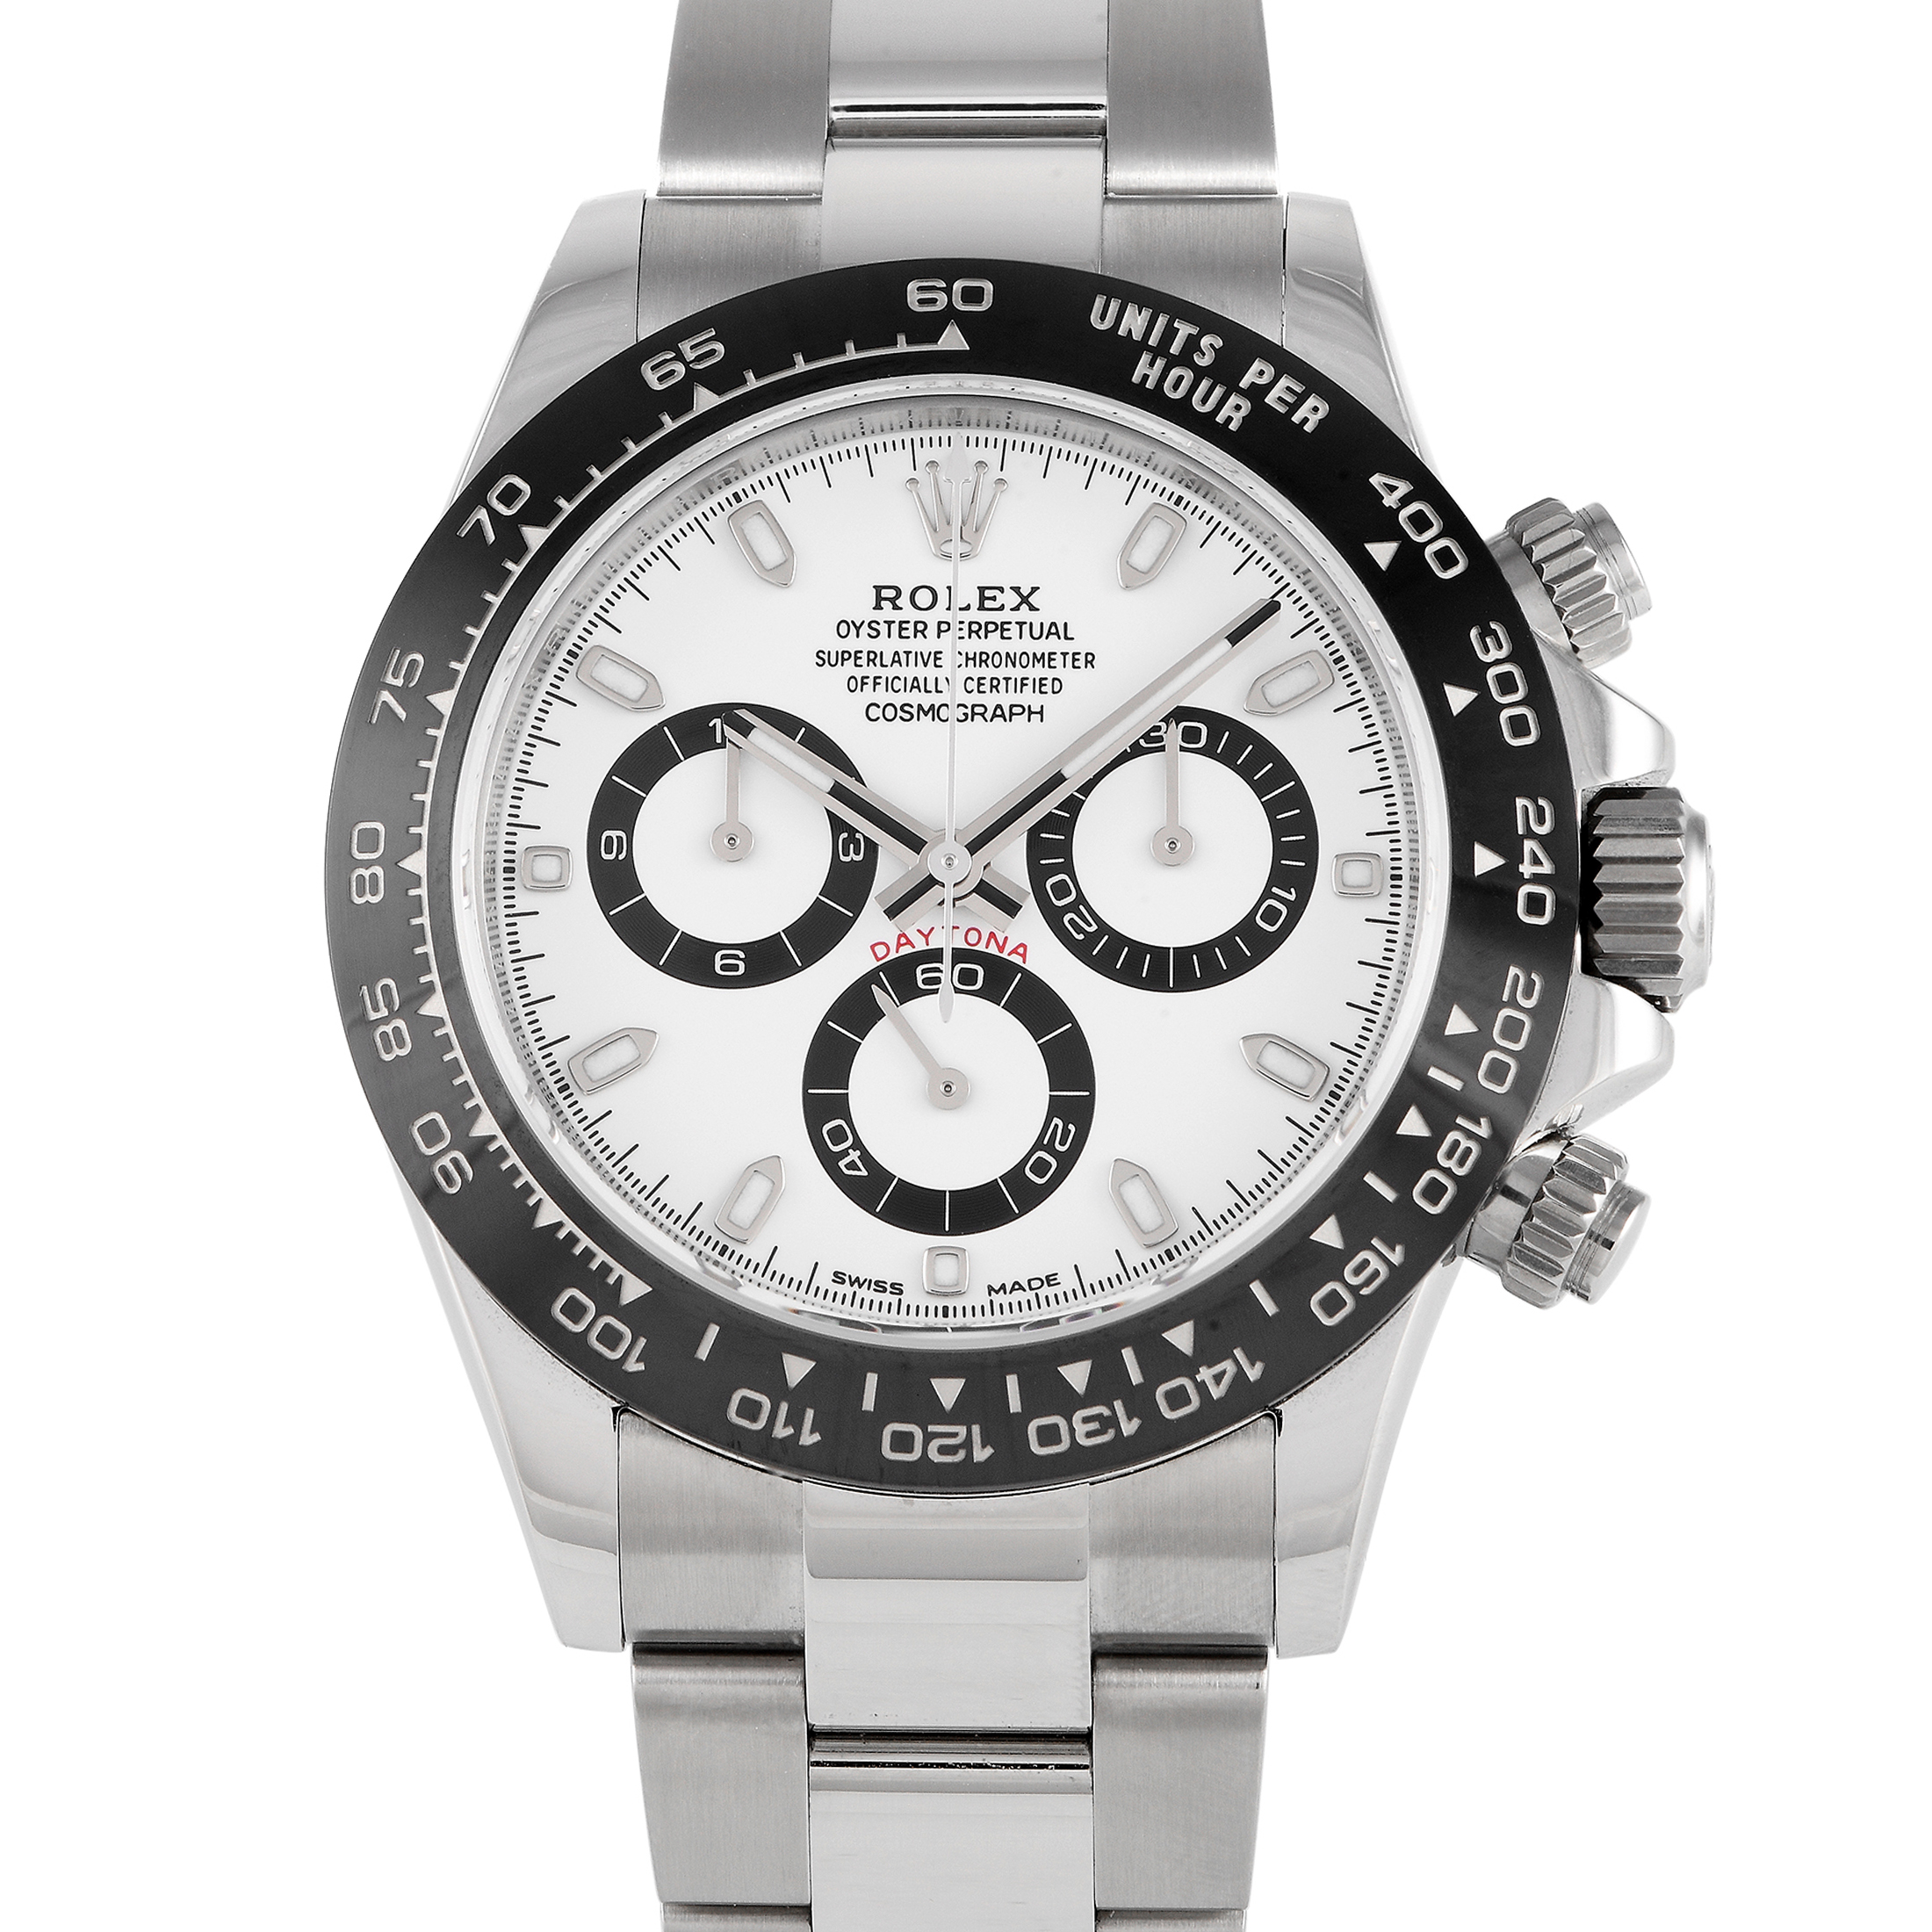 Rolex Daytona White Dial Watch 116500LN